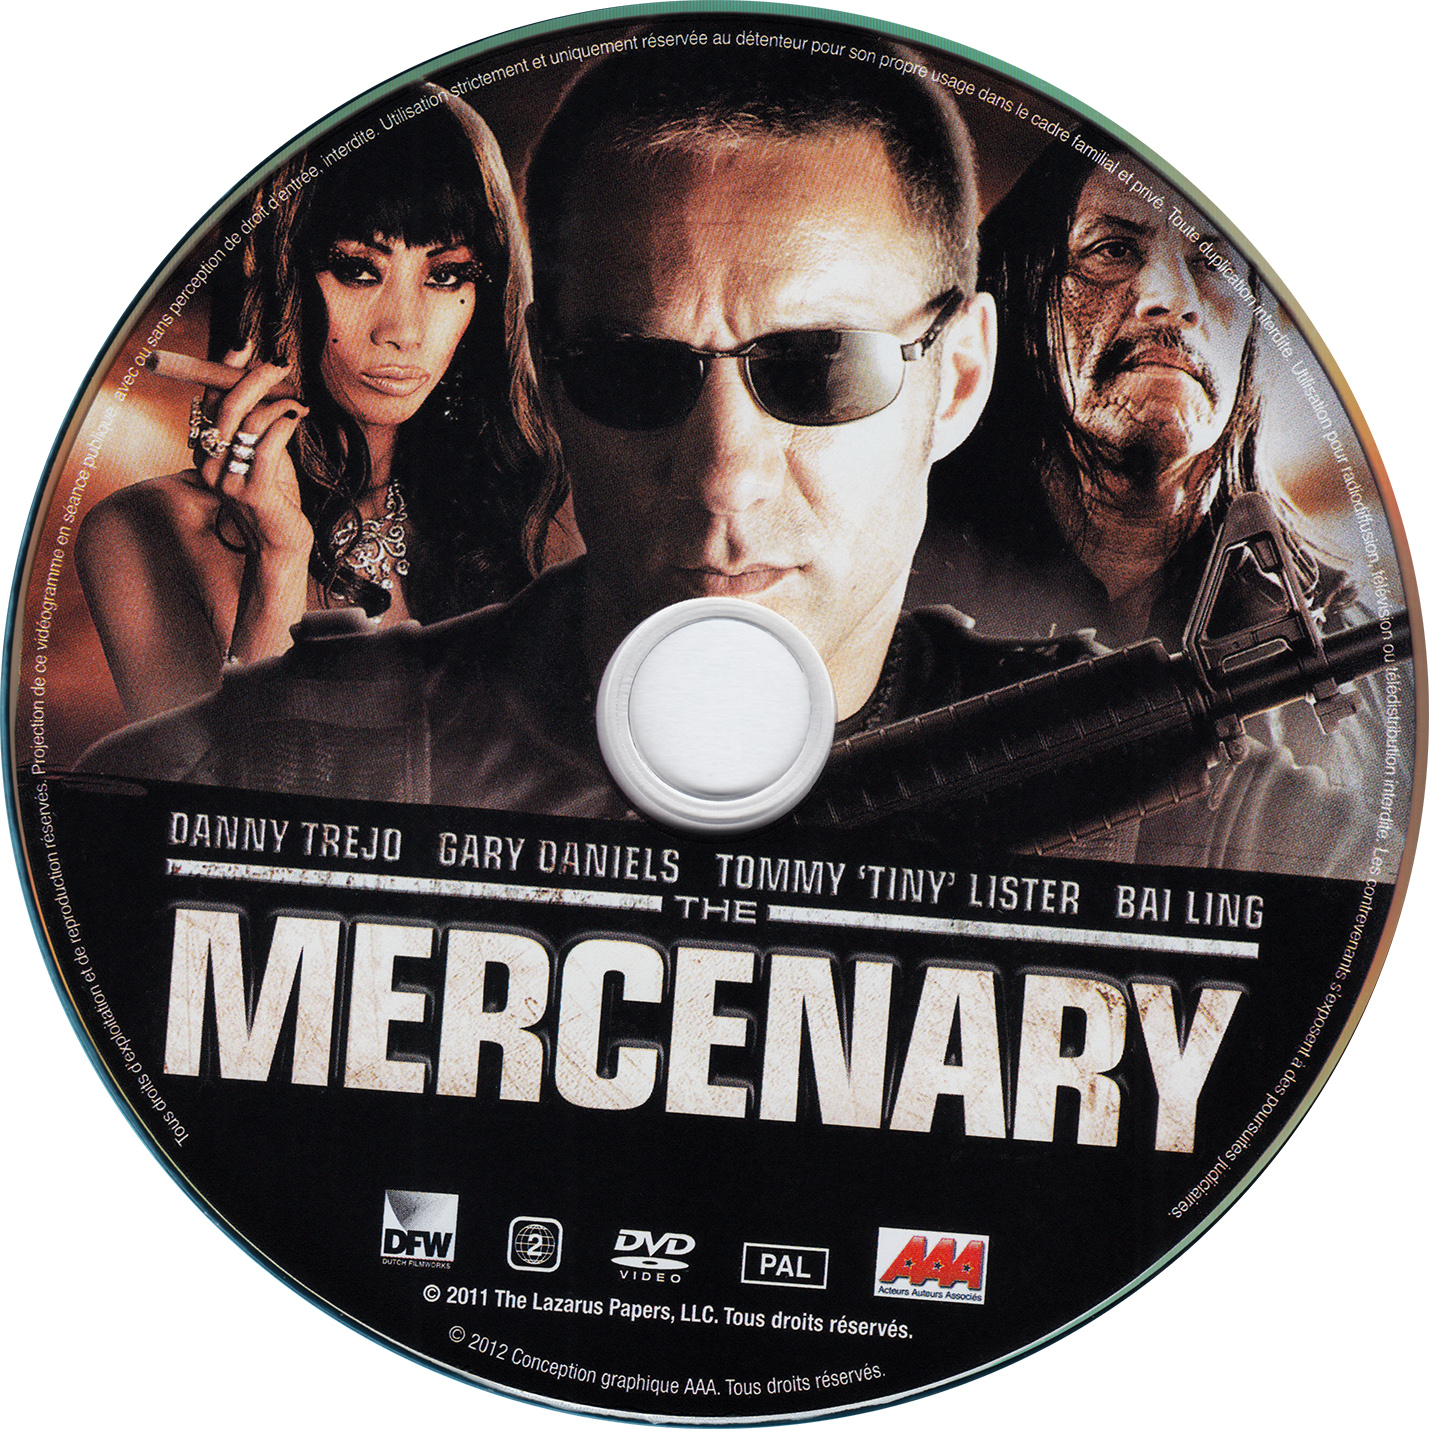 The mercenary